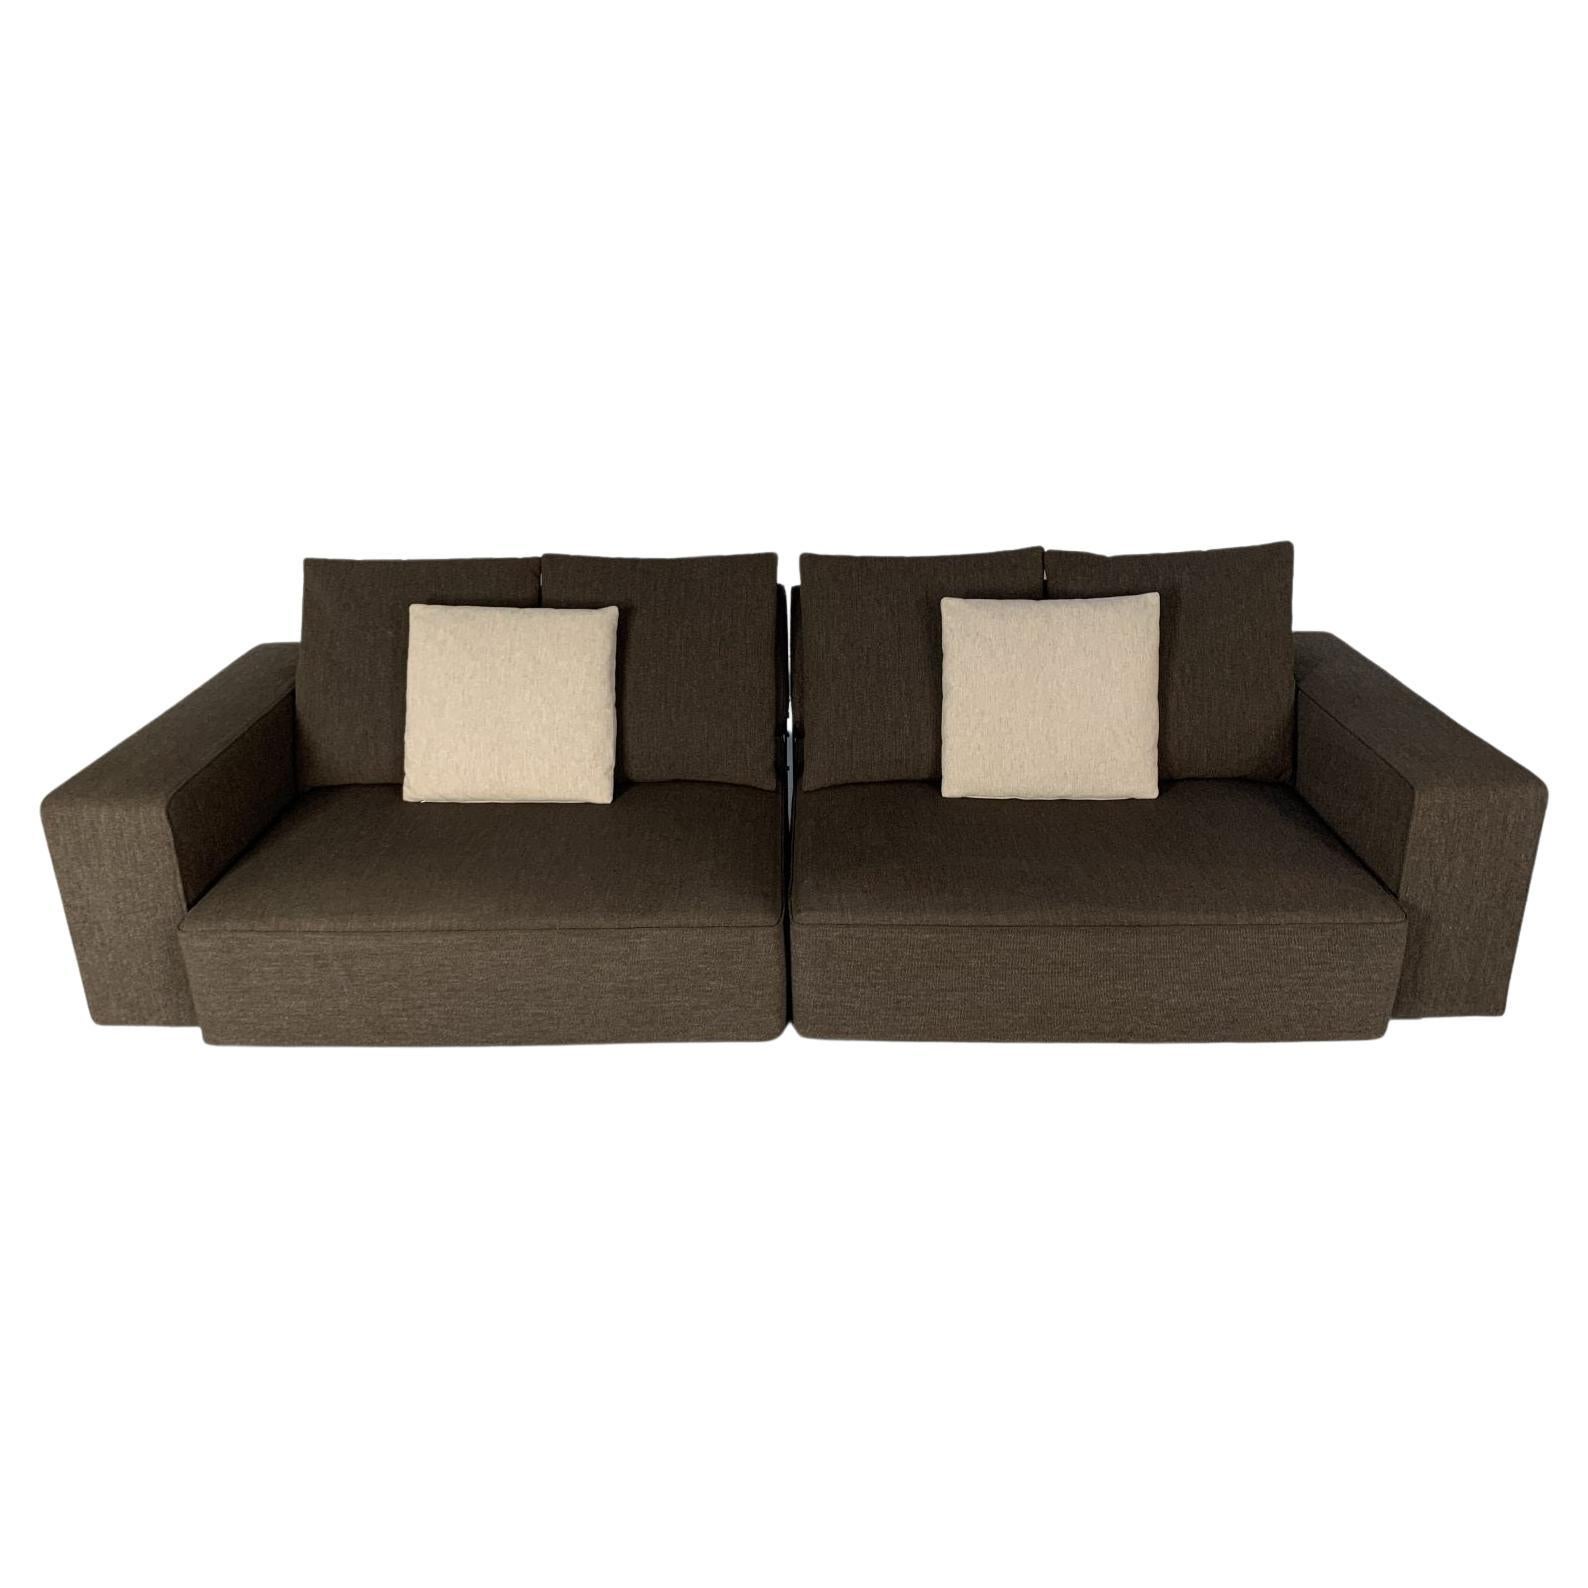 B&B Italia “Andy ’13” 2-Seat Sofa, in Dark-Brown Fabric